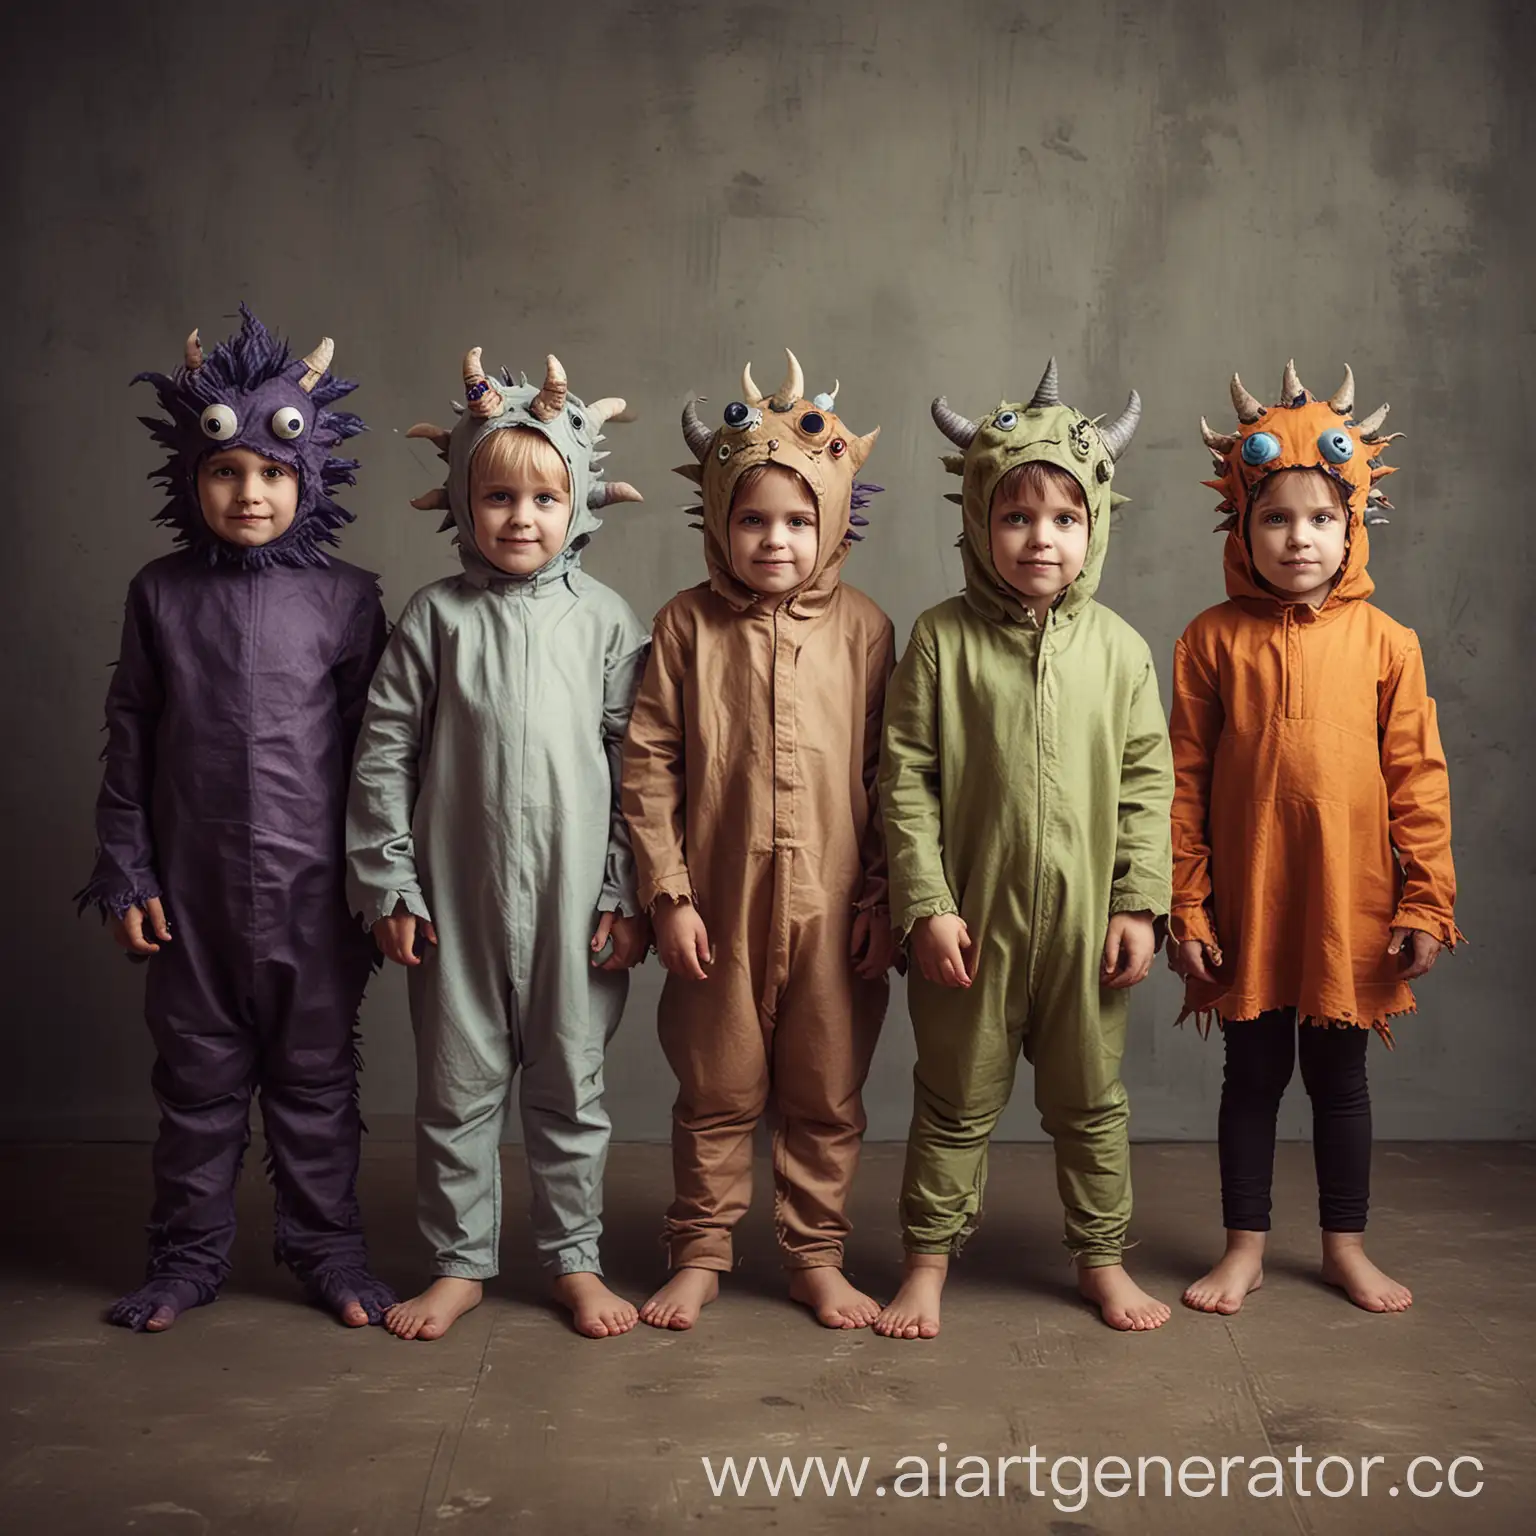 Little-Children-in-Monster-Costumes-TrickorTreating